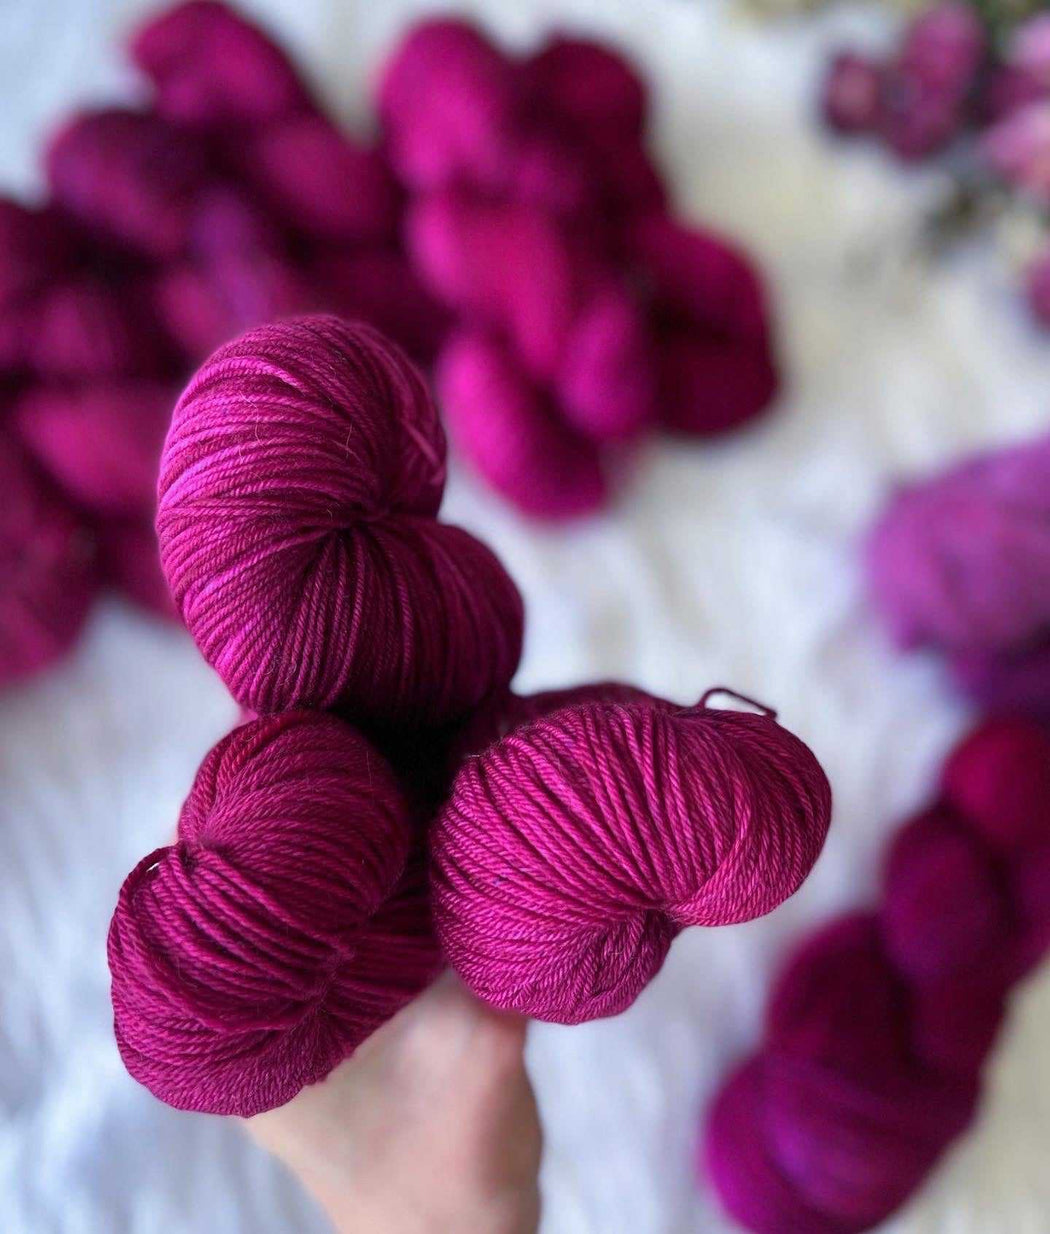 Wax Seal - Ruby and Roses Yarn - Hand Dyed Yarn